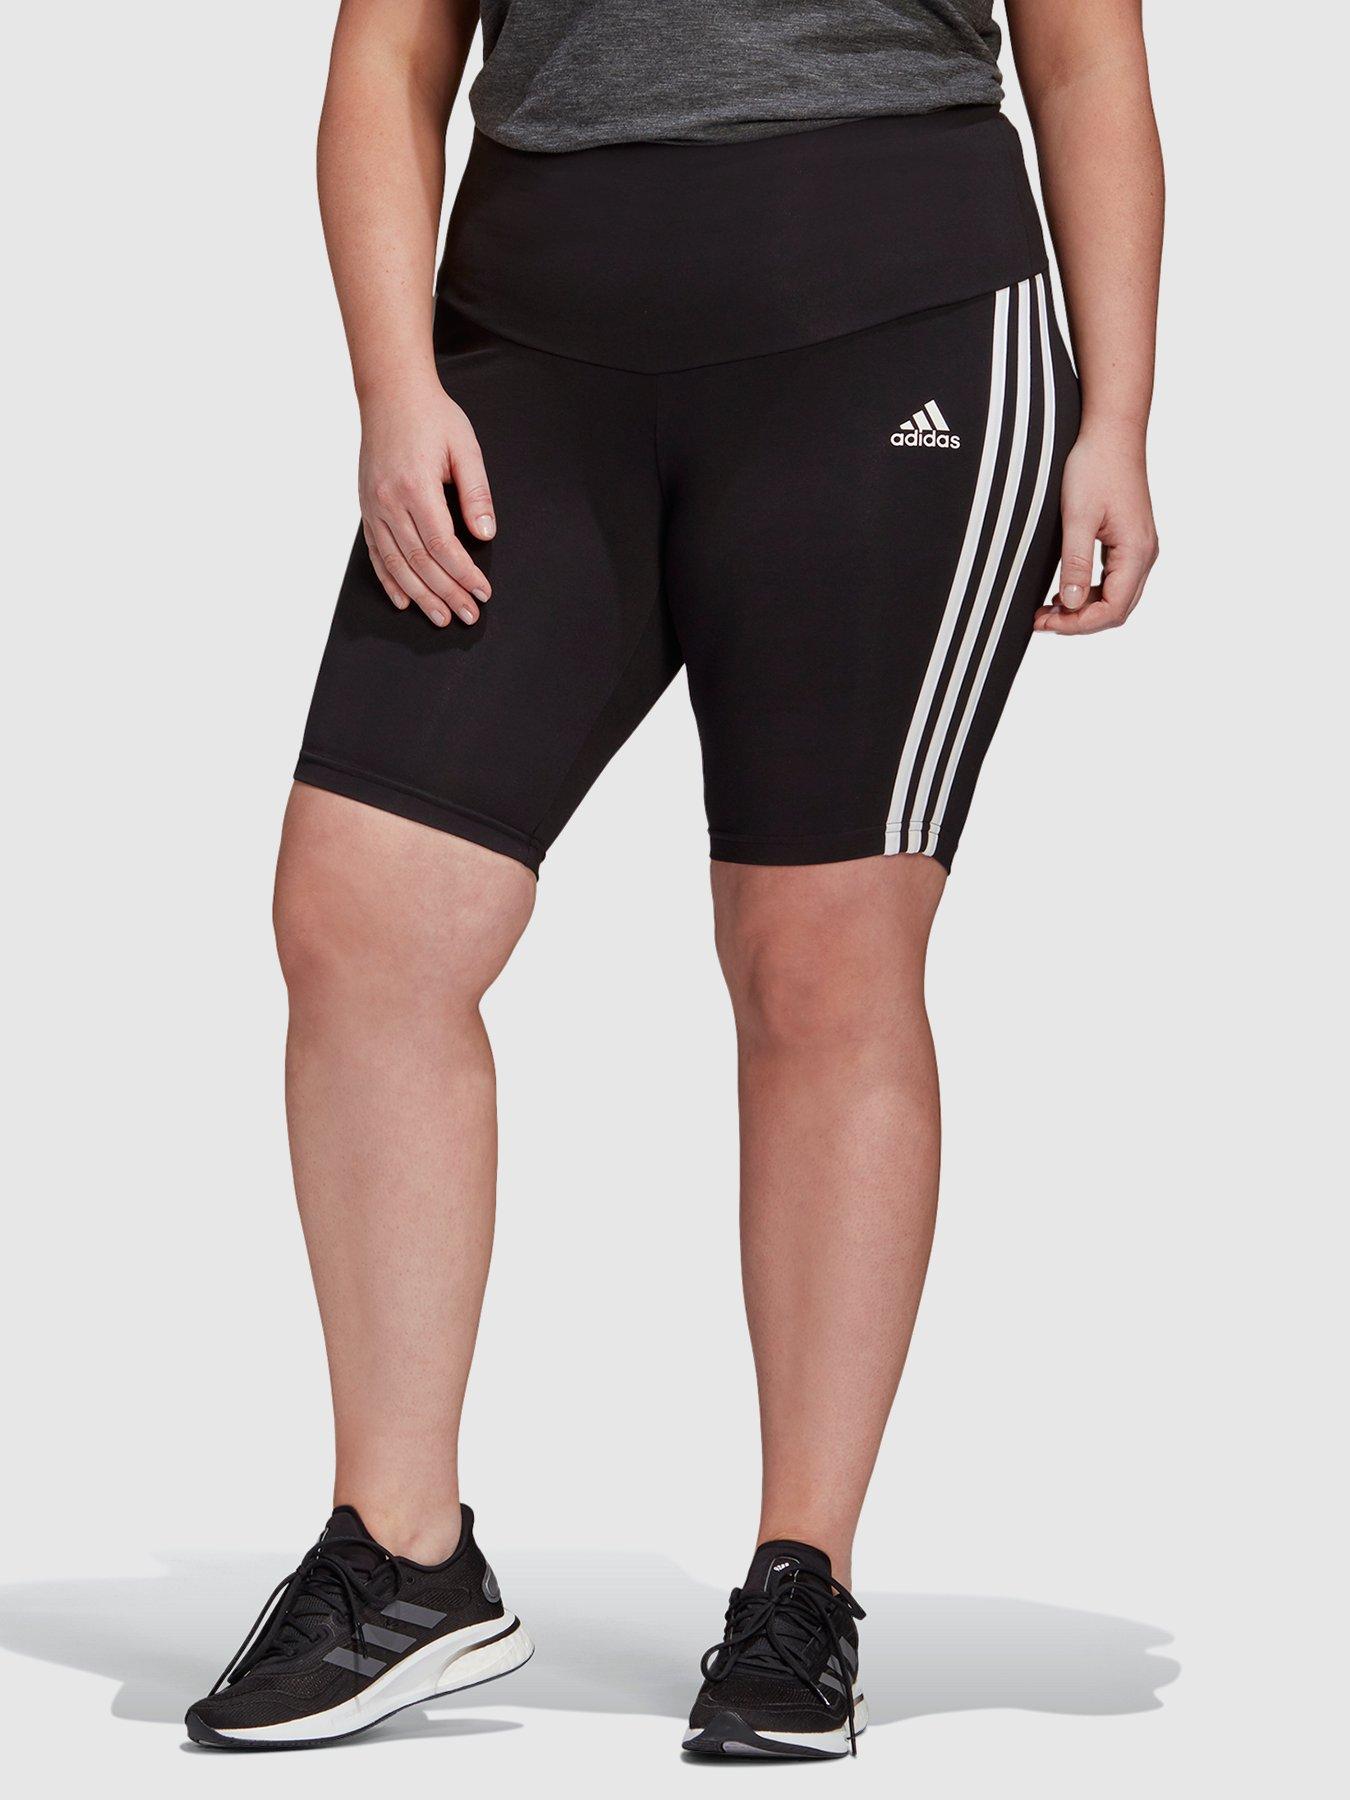 adidas plus size biker shorts cheap online